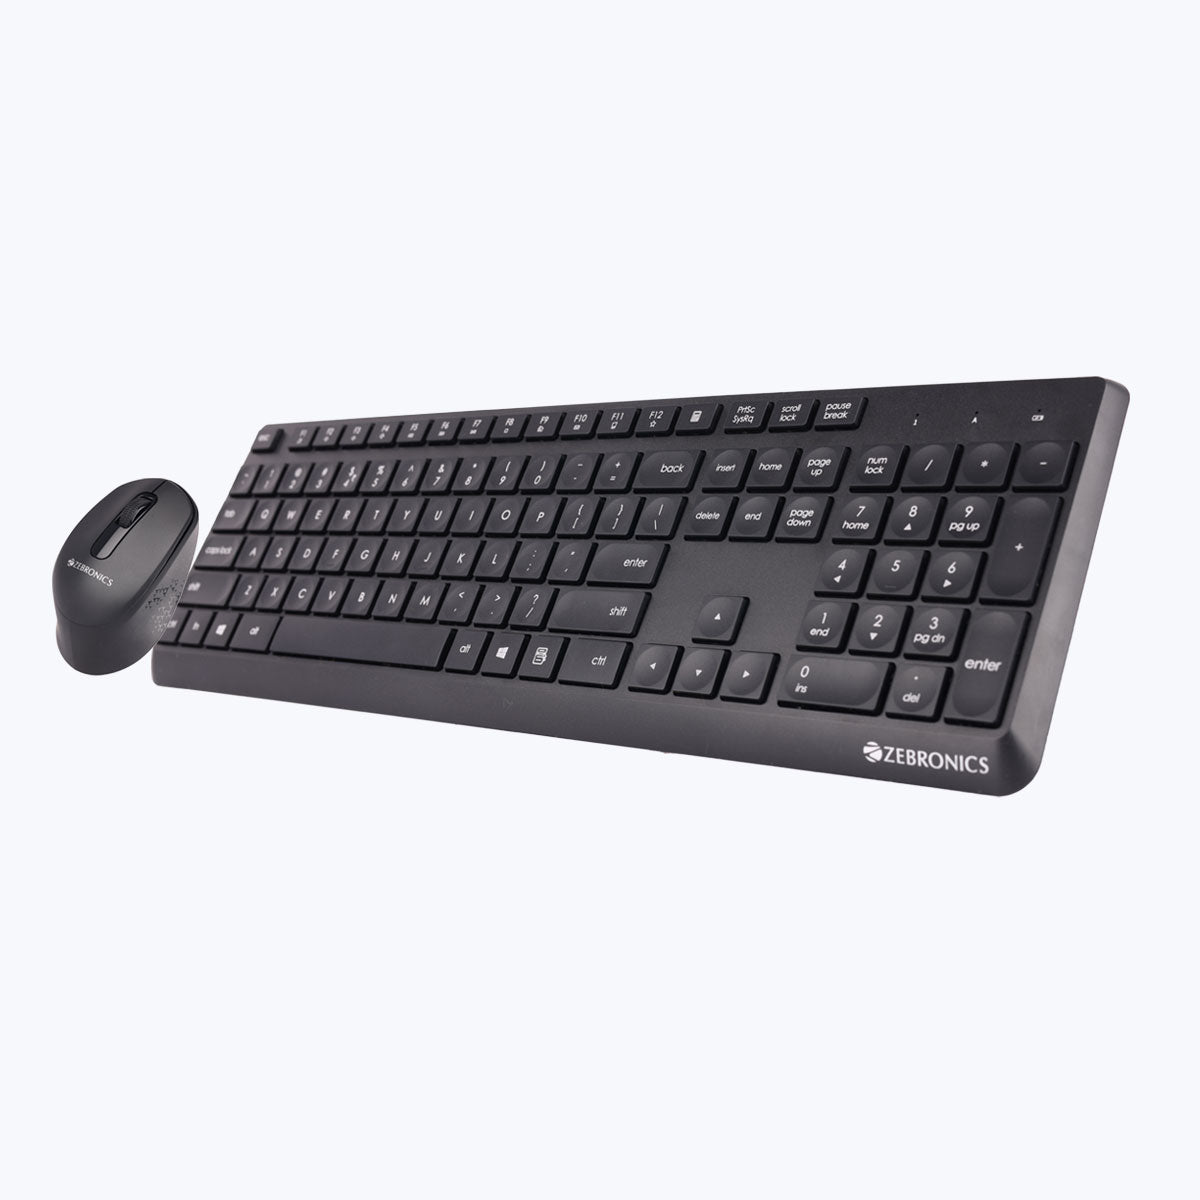 Zeb-Companion 200 - Keyboard and mouse combo - Zebronics